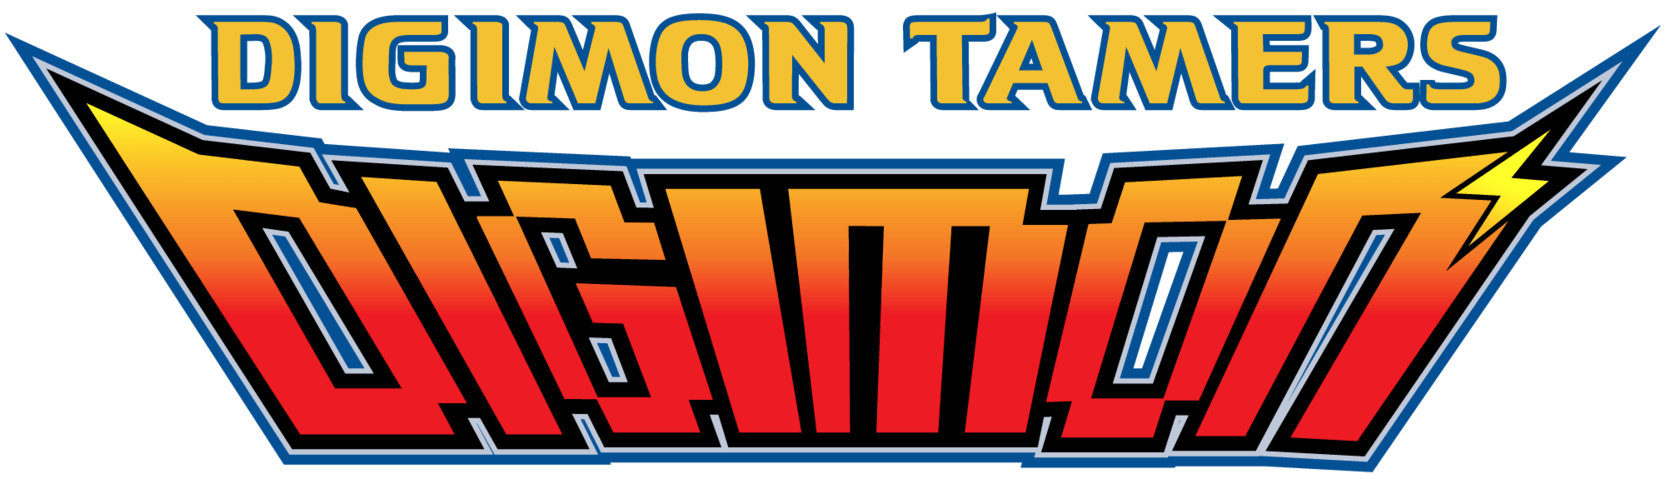 Digimon Logo - Digimon Tamers Logo Vector v2